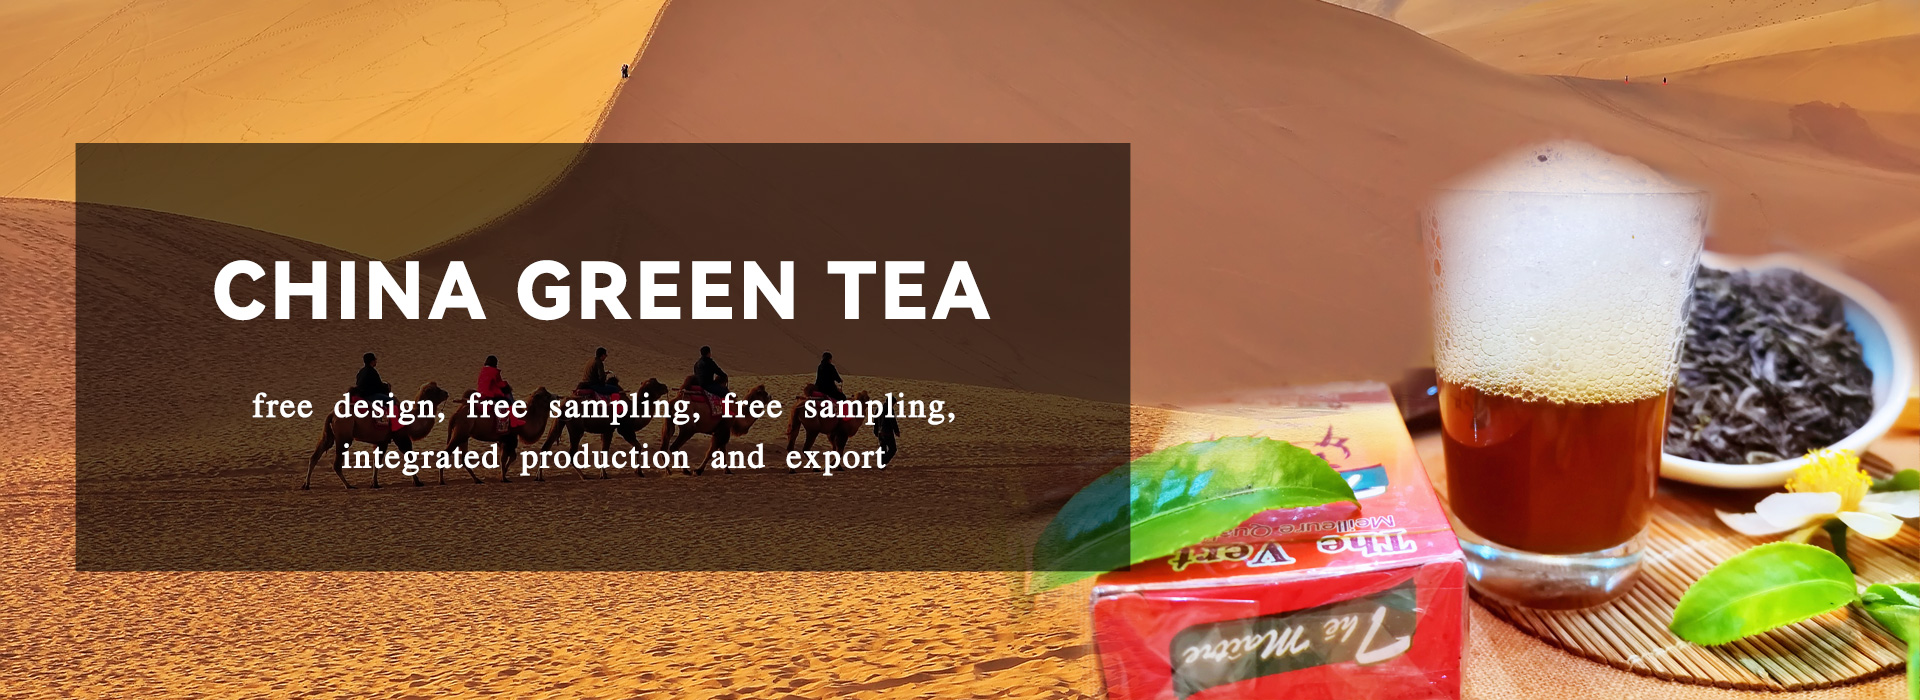 Chá verde da China, chá de pólvora